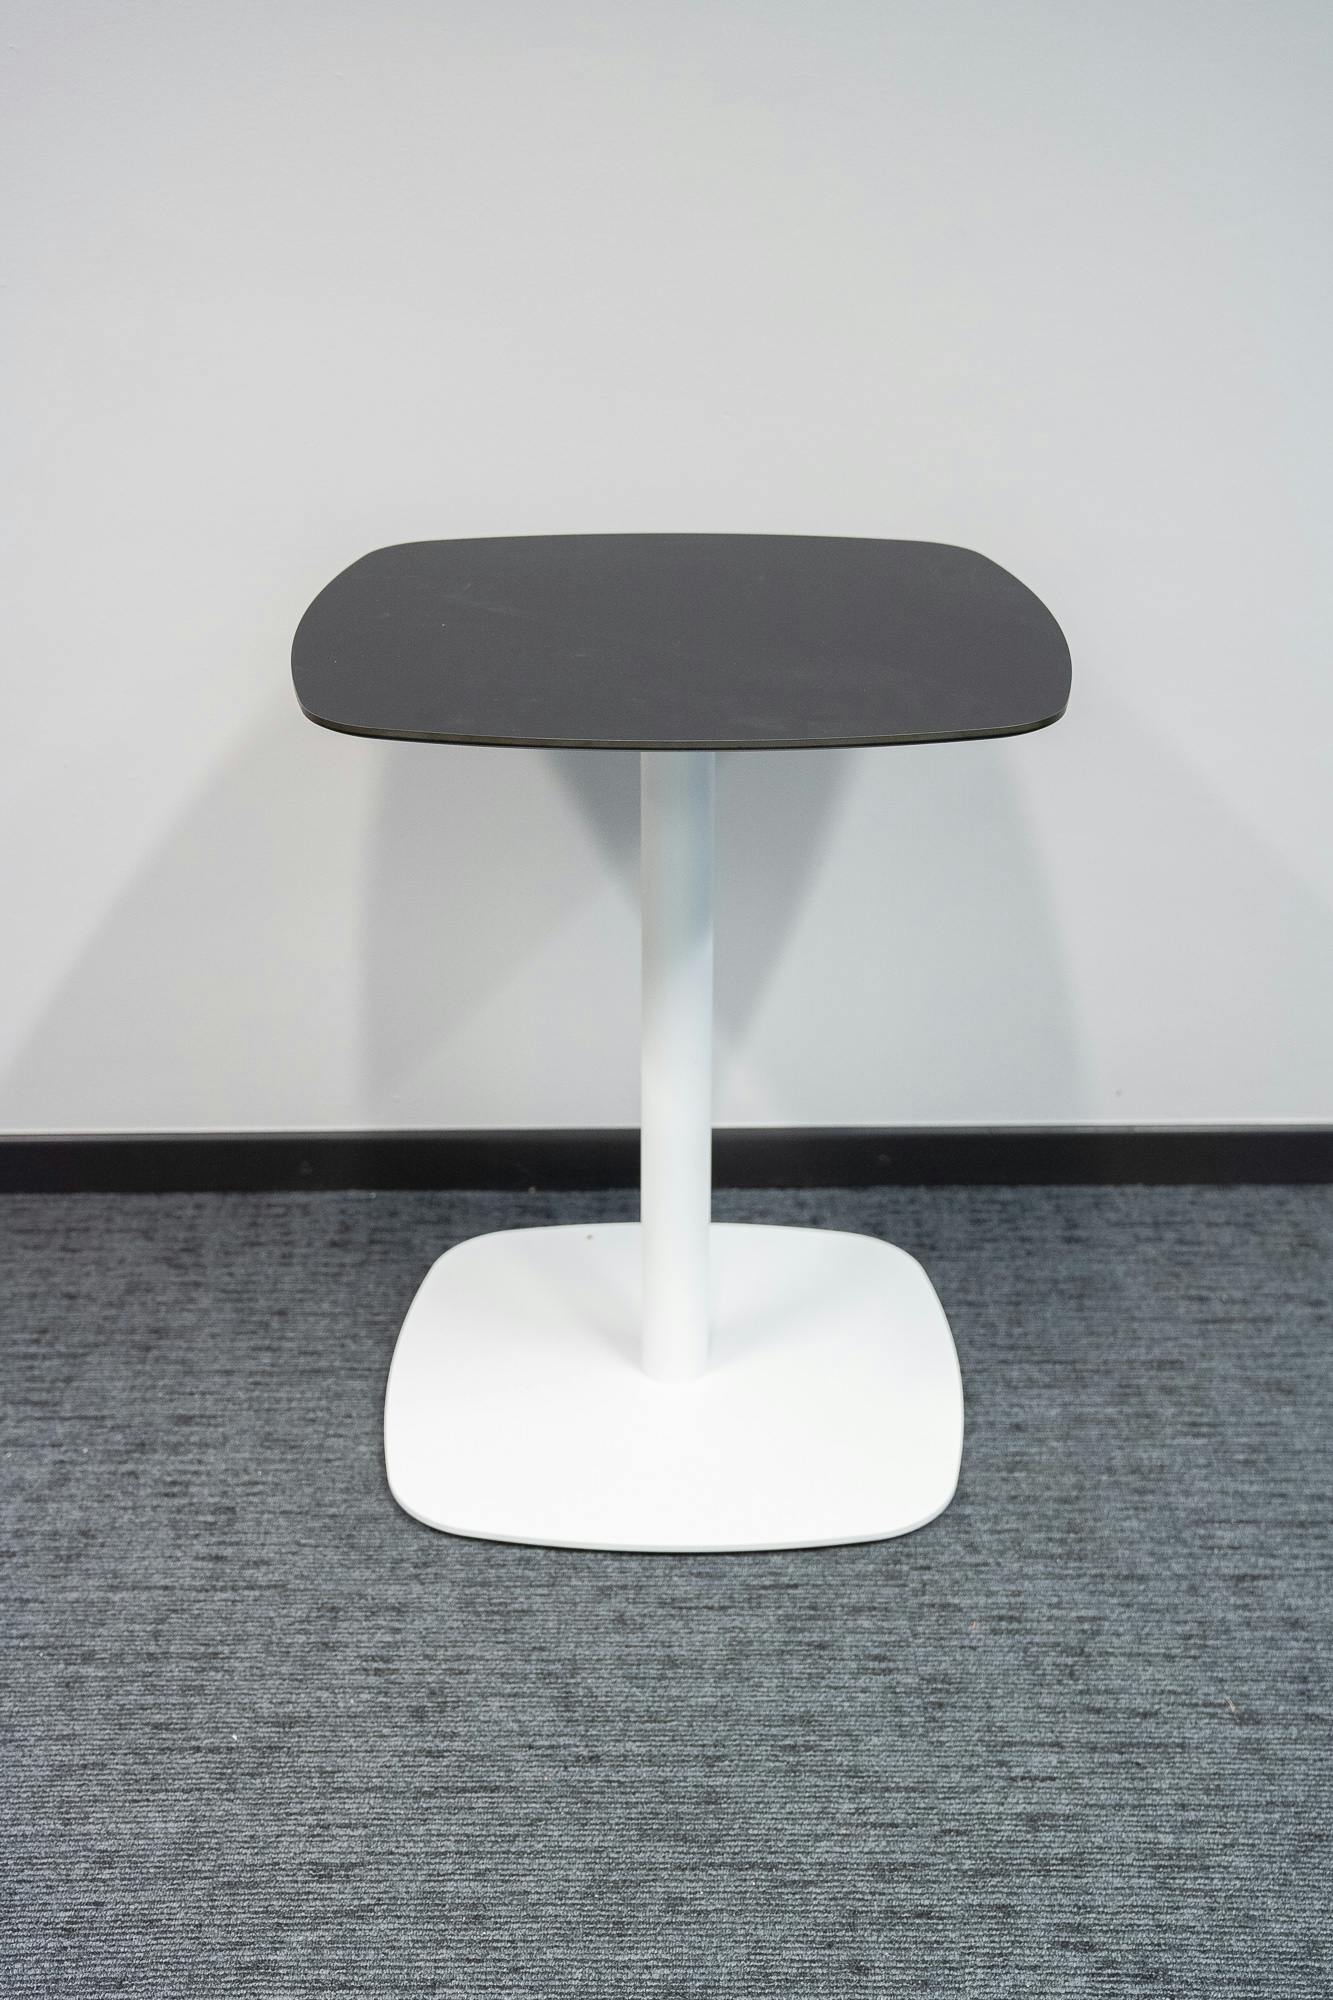 Black and white square iron table designed by Estudi Manel Molina - Relieve Furniture